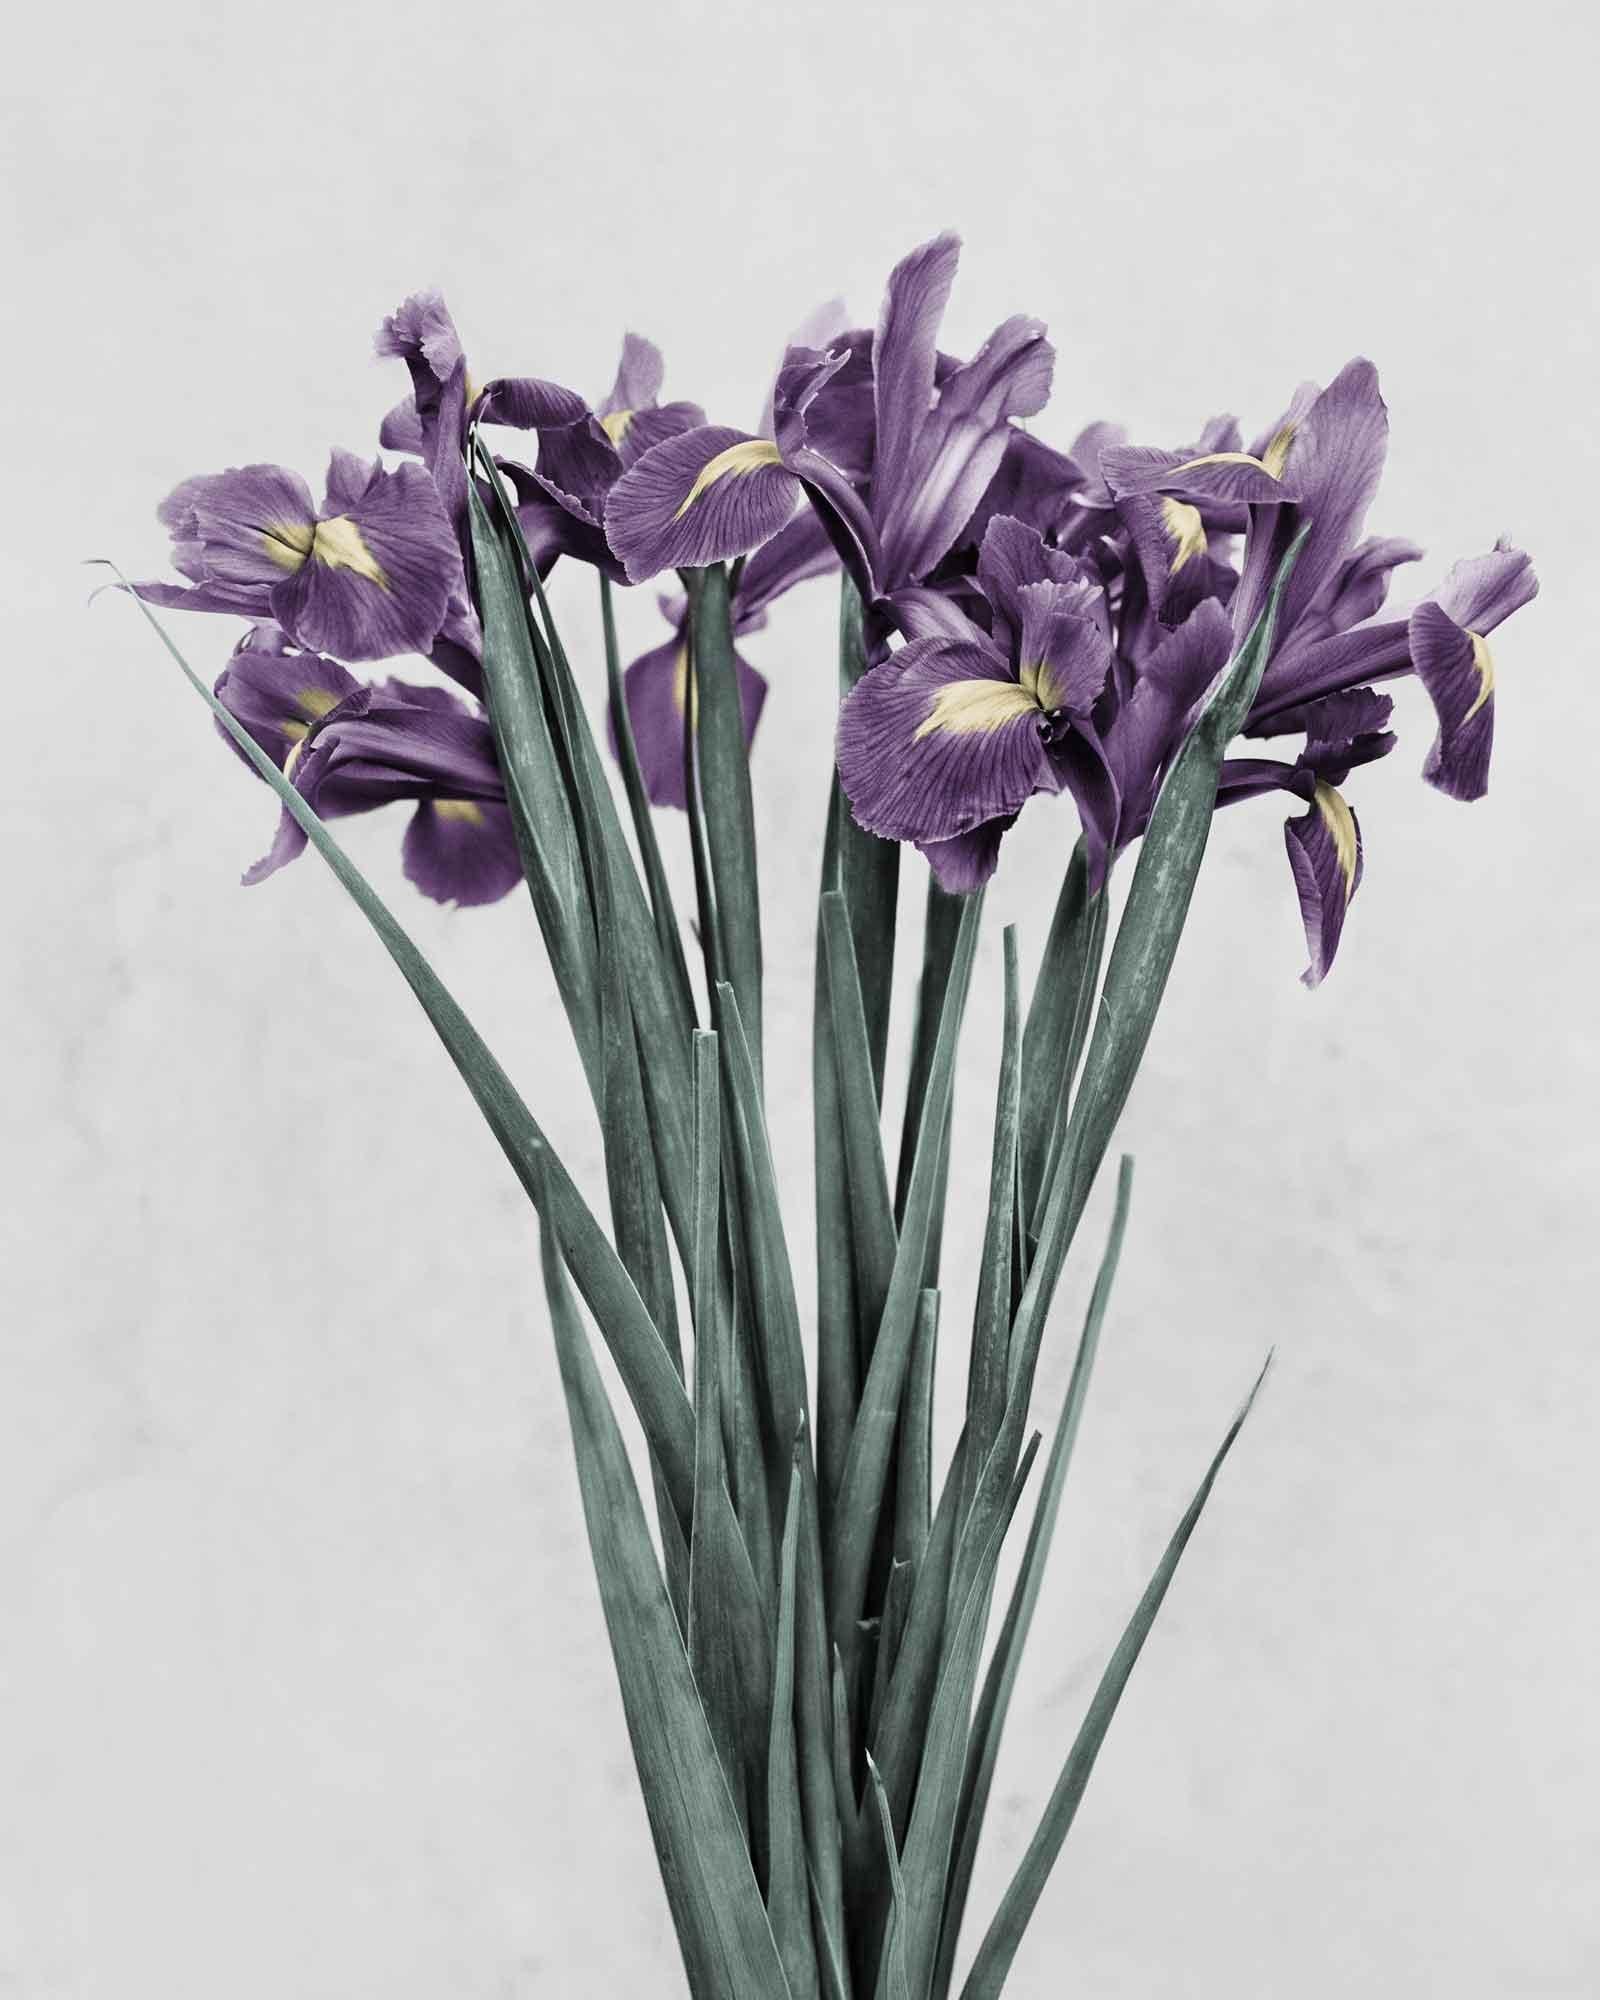 Vee Speers Still-Life Photograph - Botanica #21 (Iris Germanica)